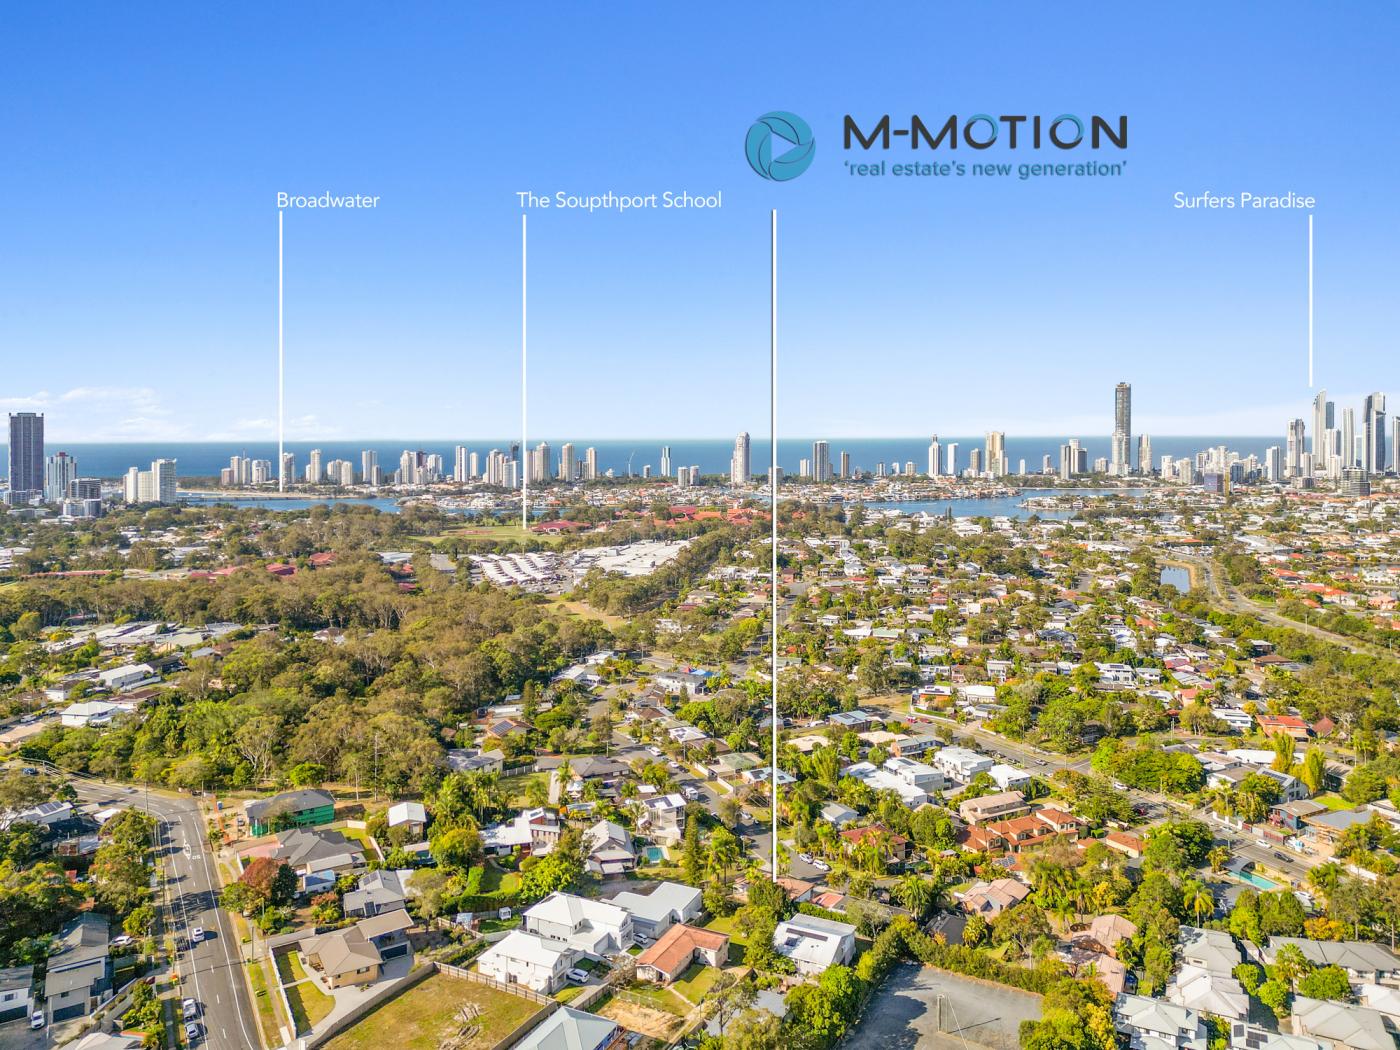 M-Motion Real Estate Agency, 29 Joden Place, Southport QLD 4215, Michael Mahon, Lauren Mahon Best Real Estate Agent Gold Coast